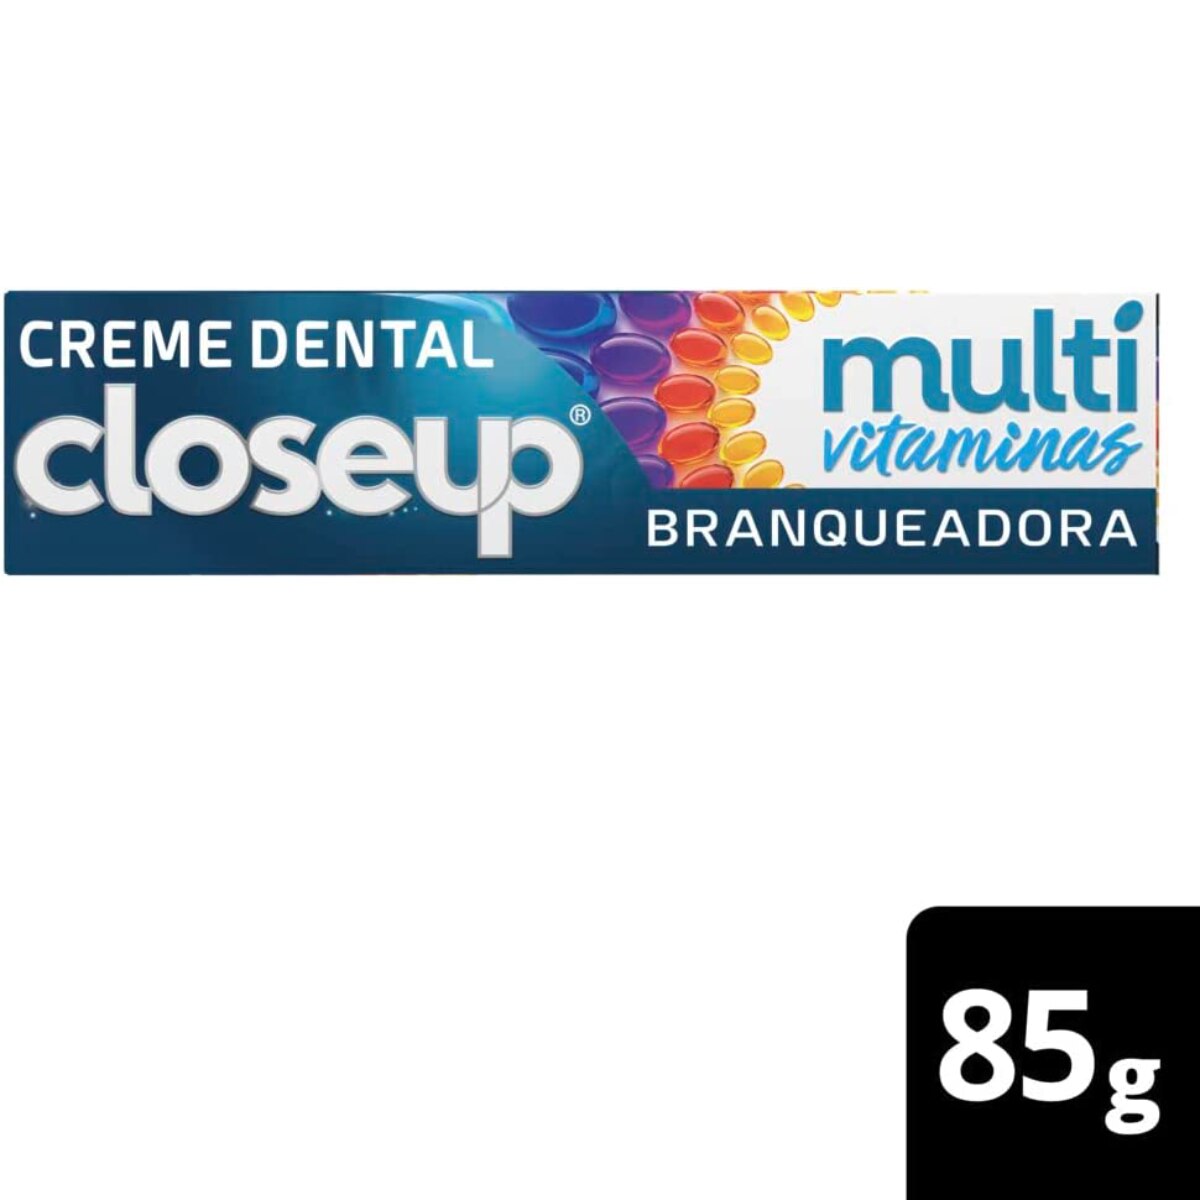 Creme Dental Close Up Multi Vitaminas Branqueadora 85g